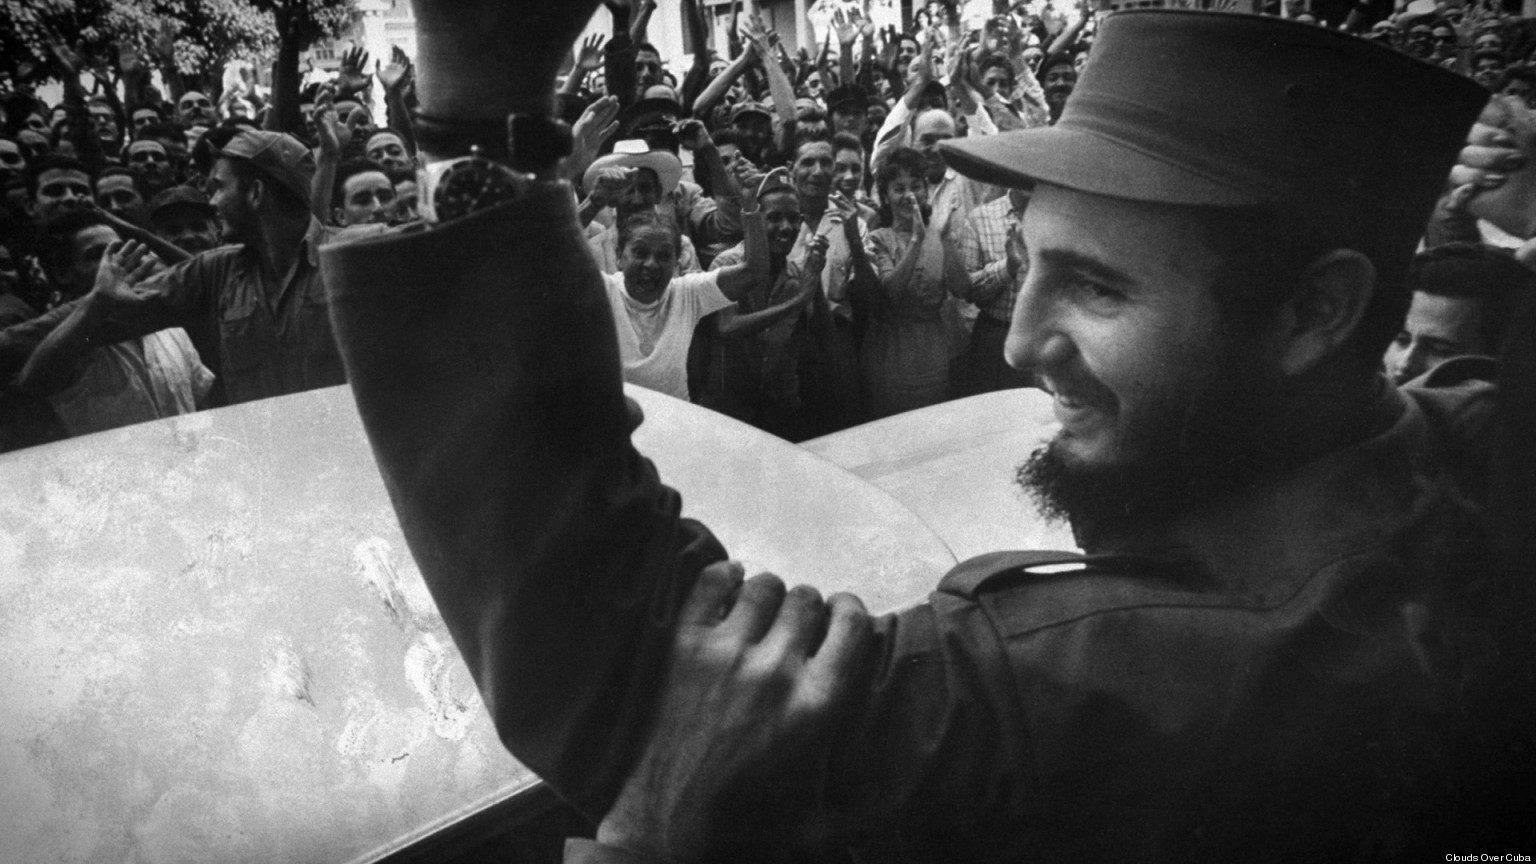 Cuba Missile Crisis Anniversary Photos Chronicle The 1962 Nuclear